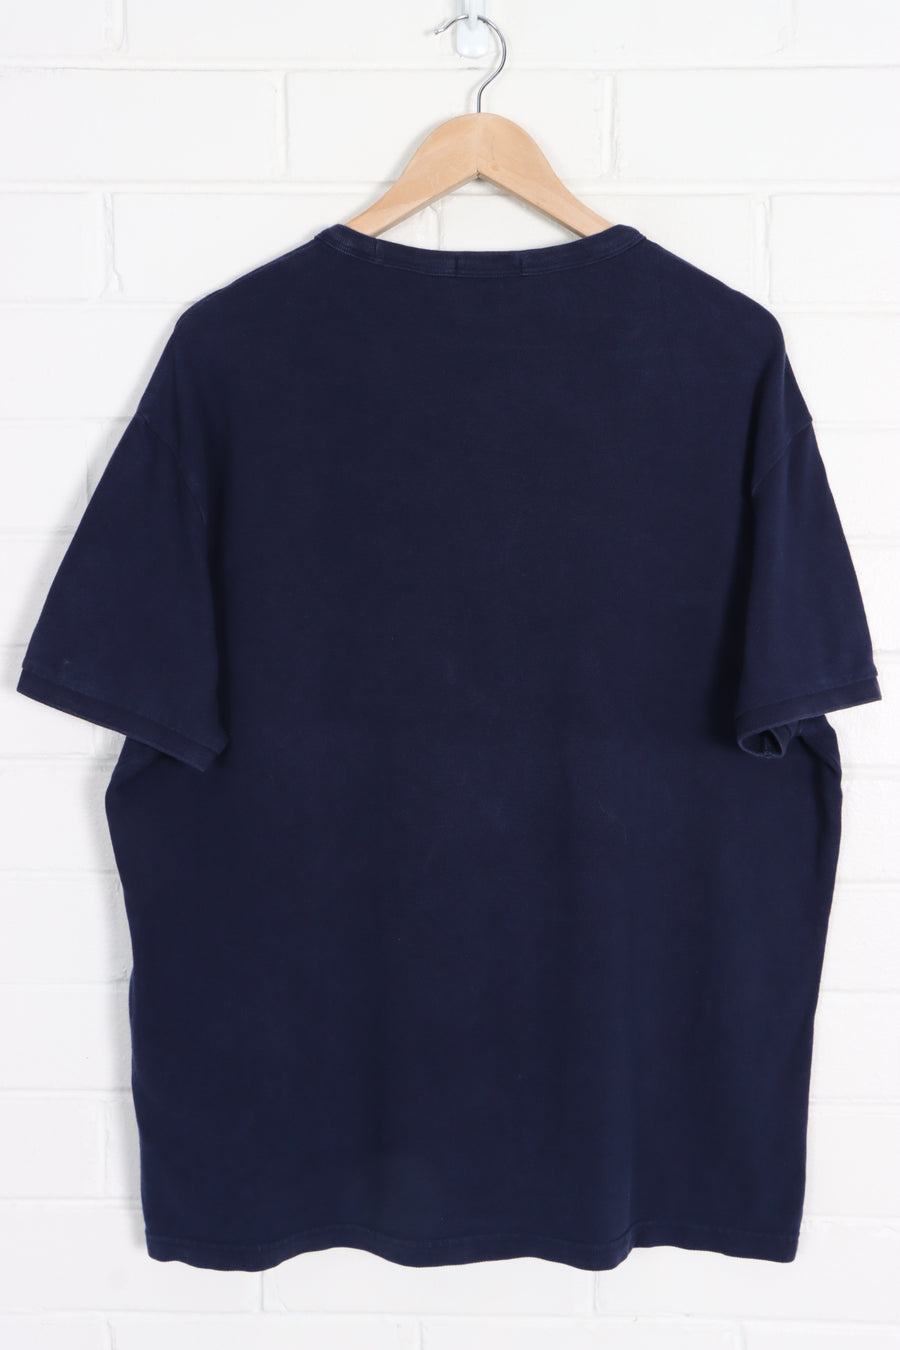 RALPH LAUREN POLO Embroidered "Polo Team" Knit T-Shirt (XL)